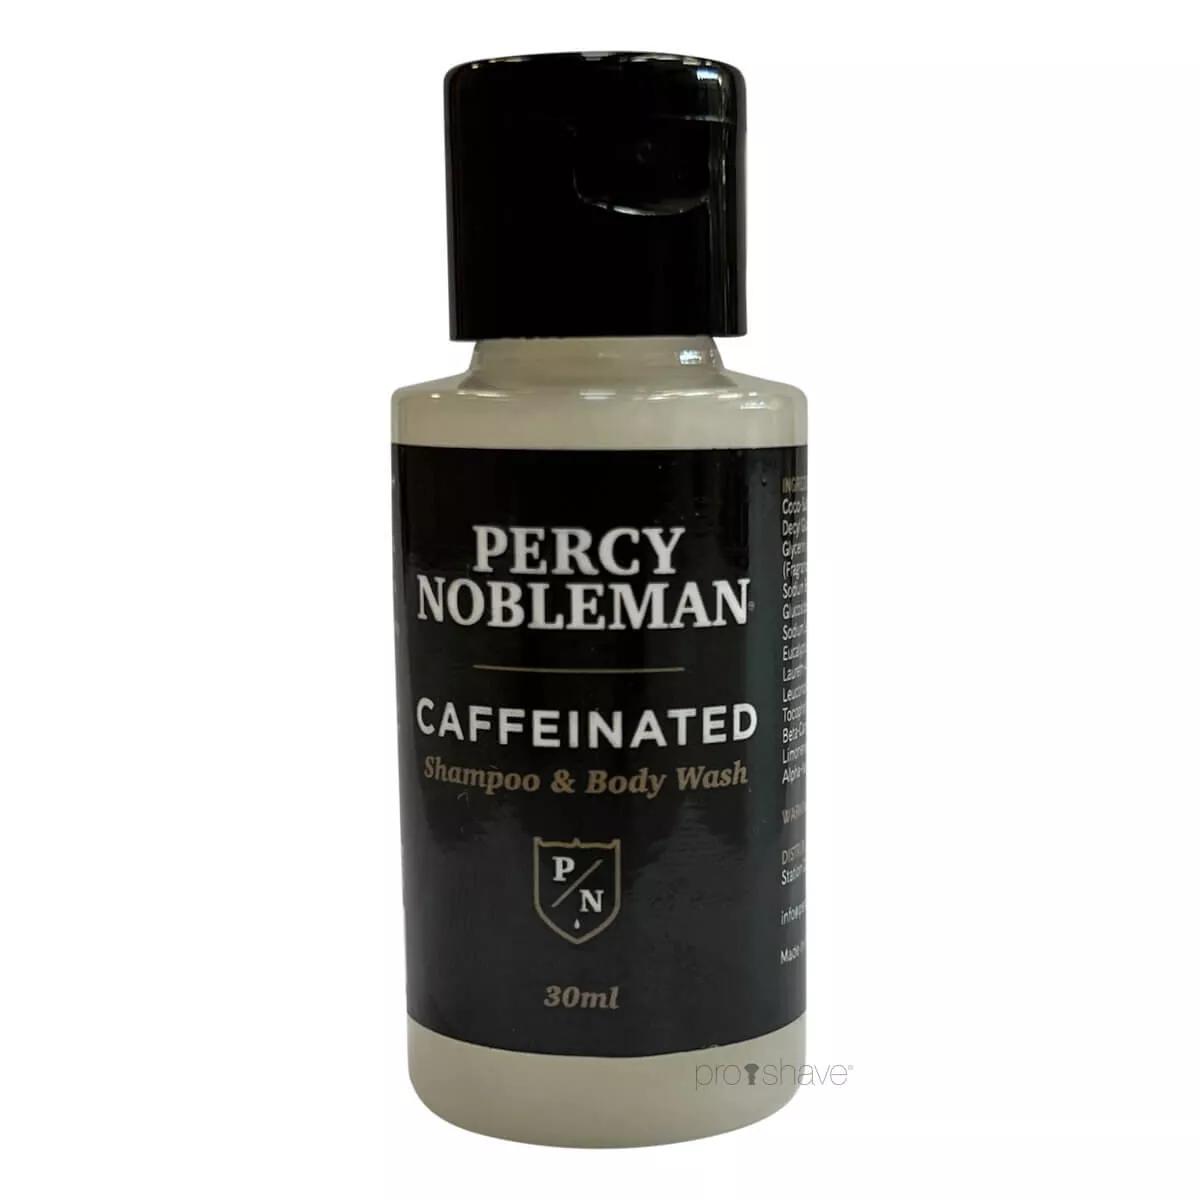 #1 - Percy Nobleman Caffeinated Shampoo & Body Wash, Rejsestørrelse, 30 ml.